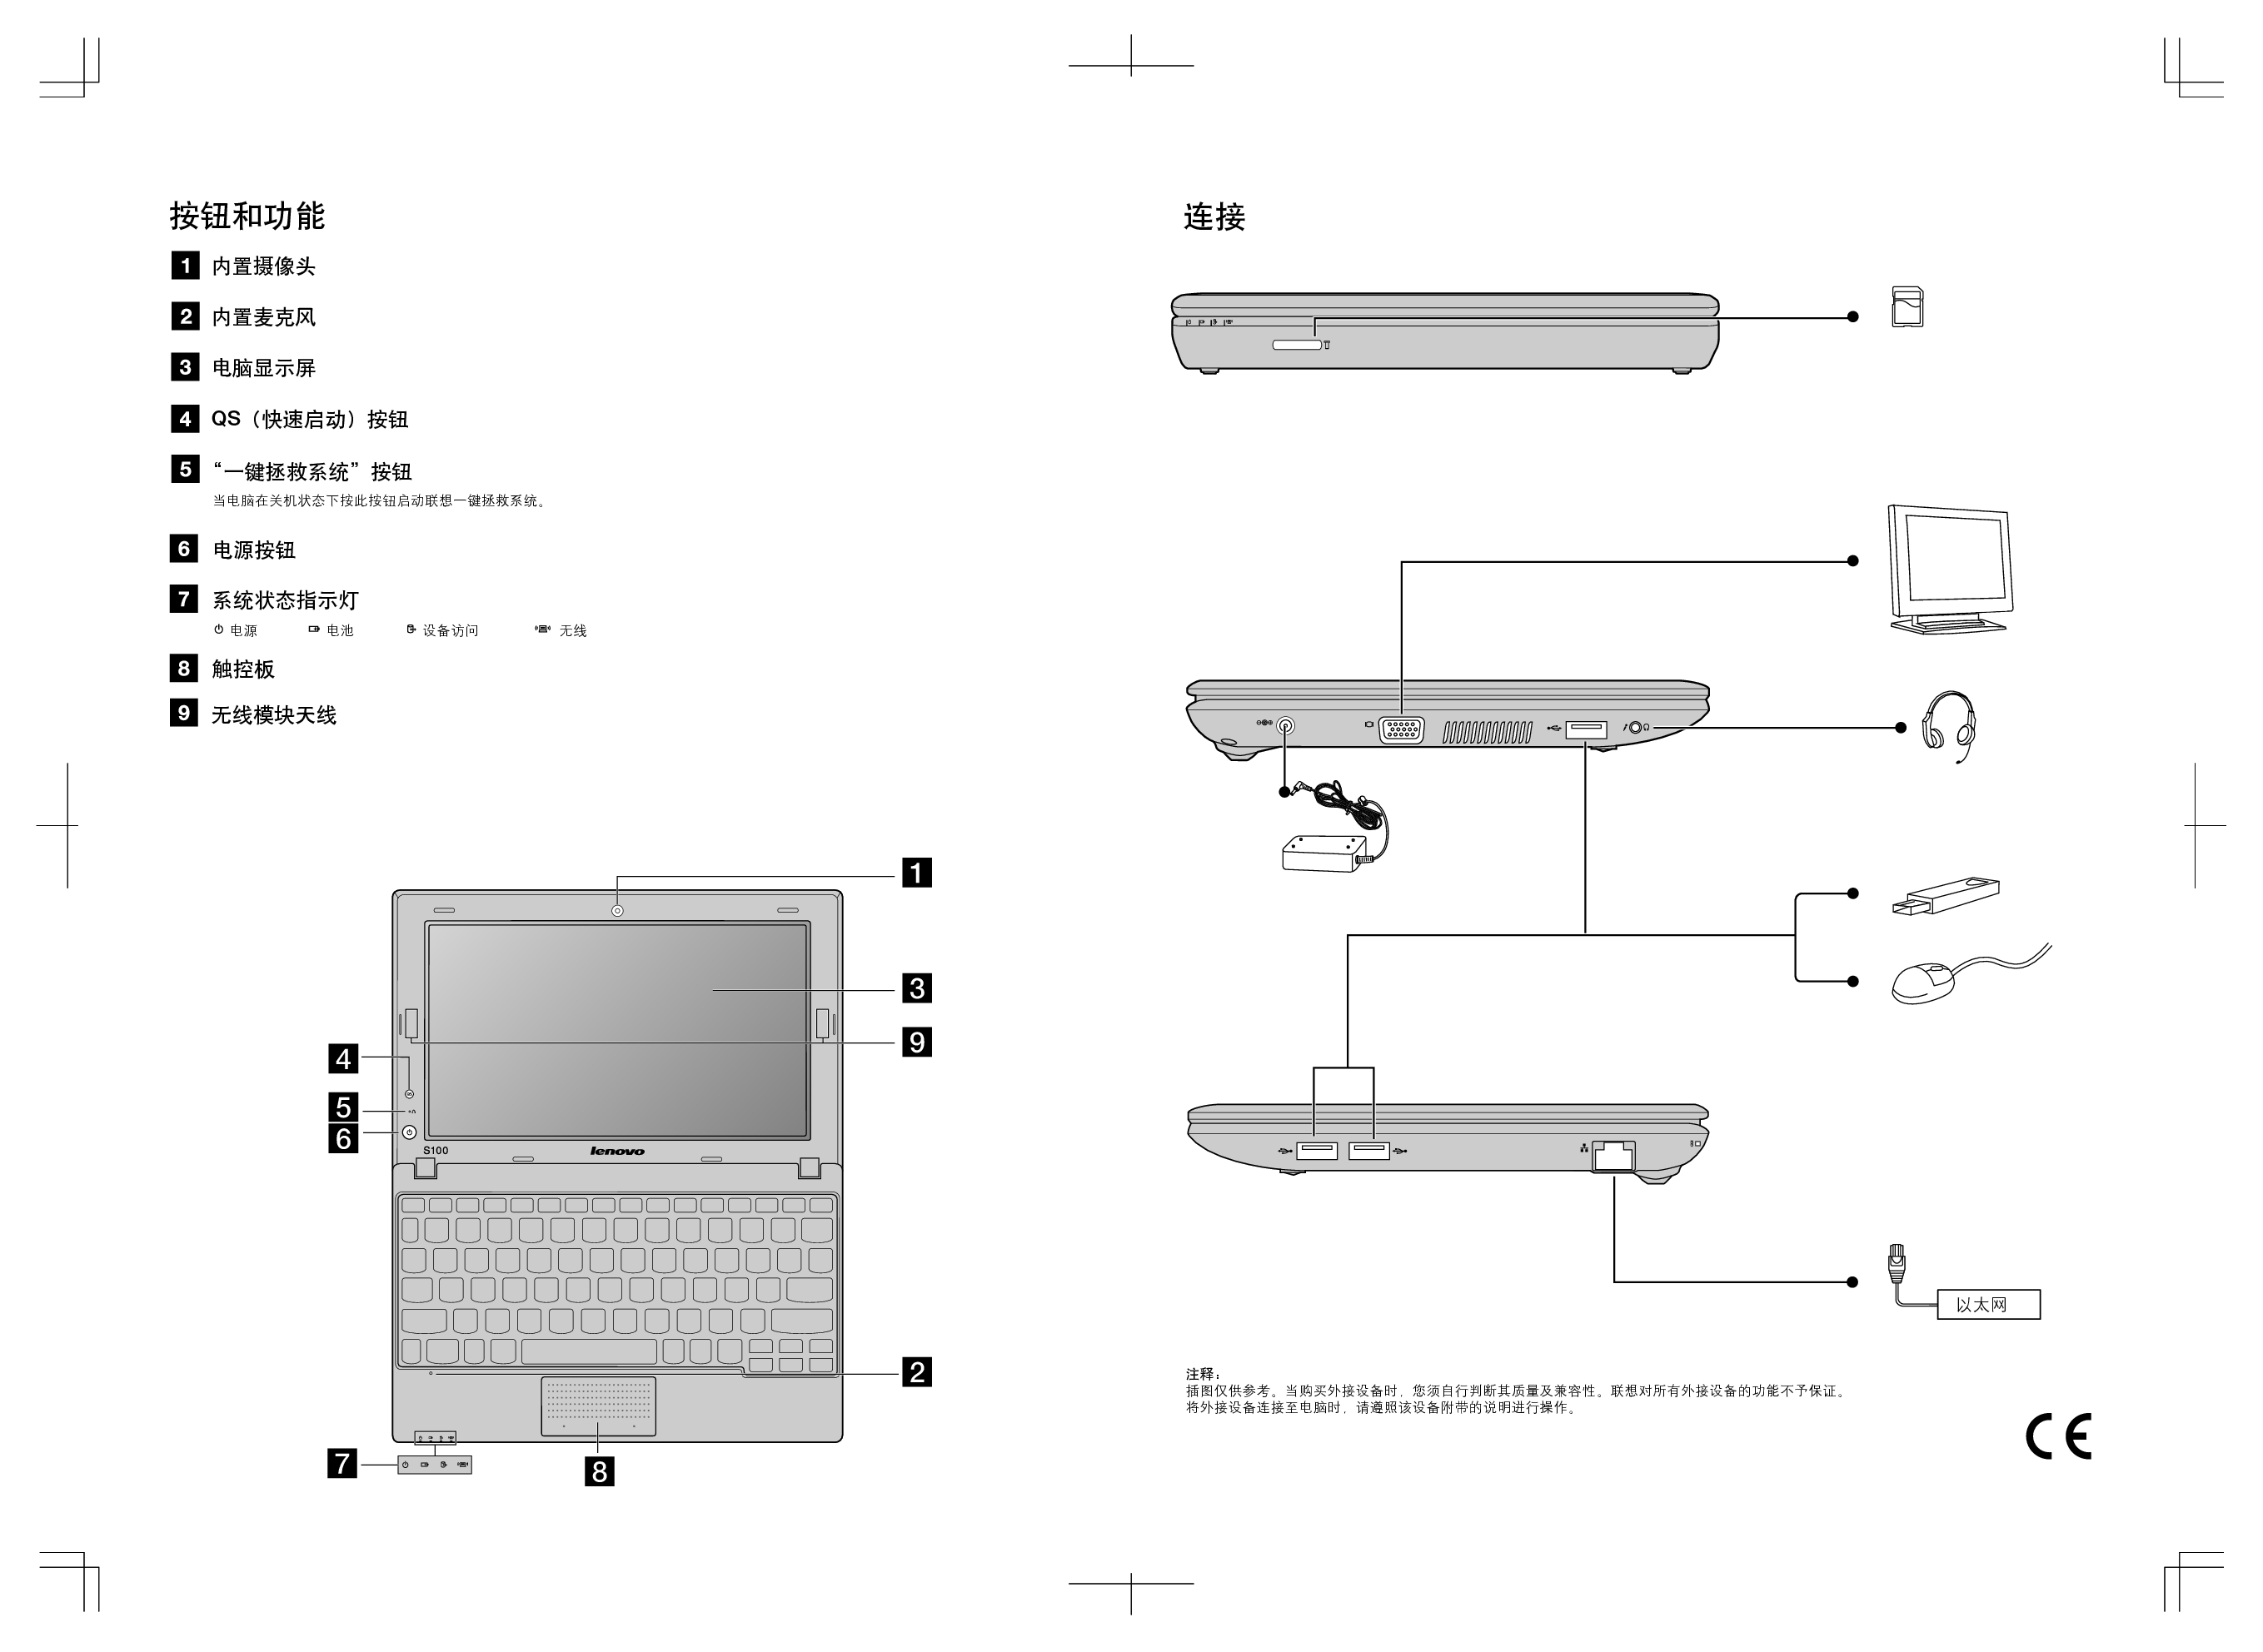 联想 Lenovo IdeaPad S100 安装说明 第1页